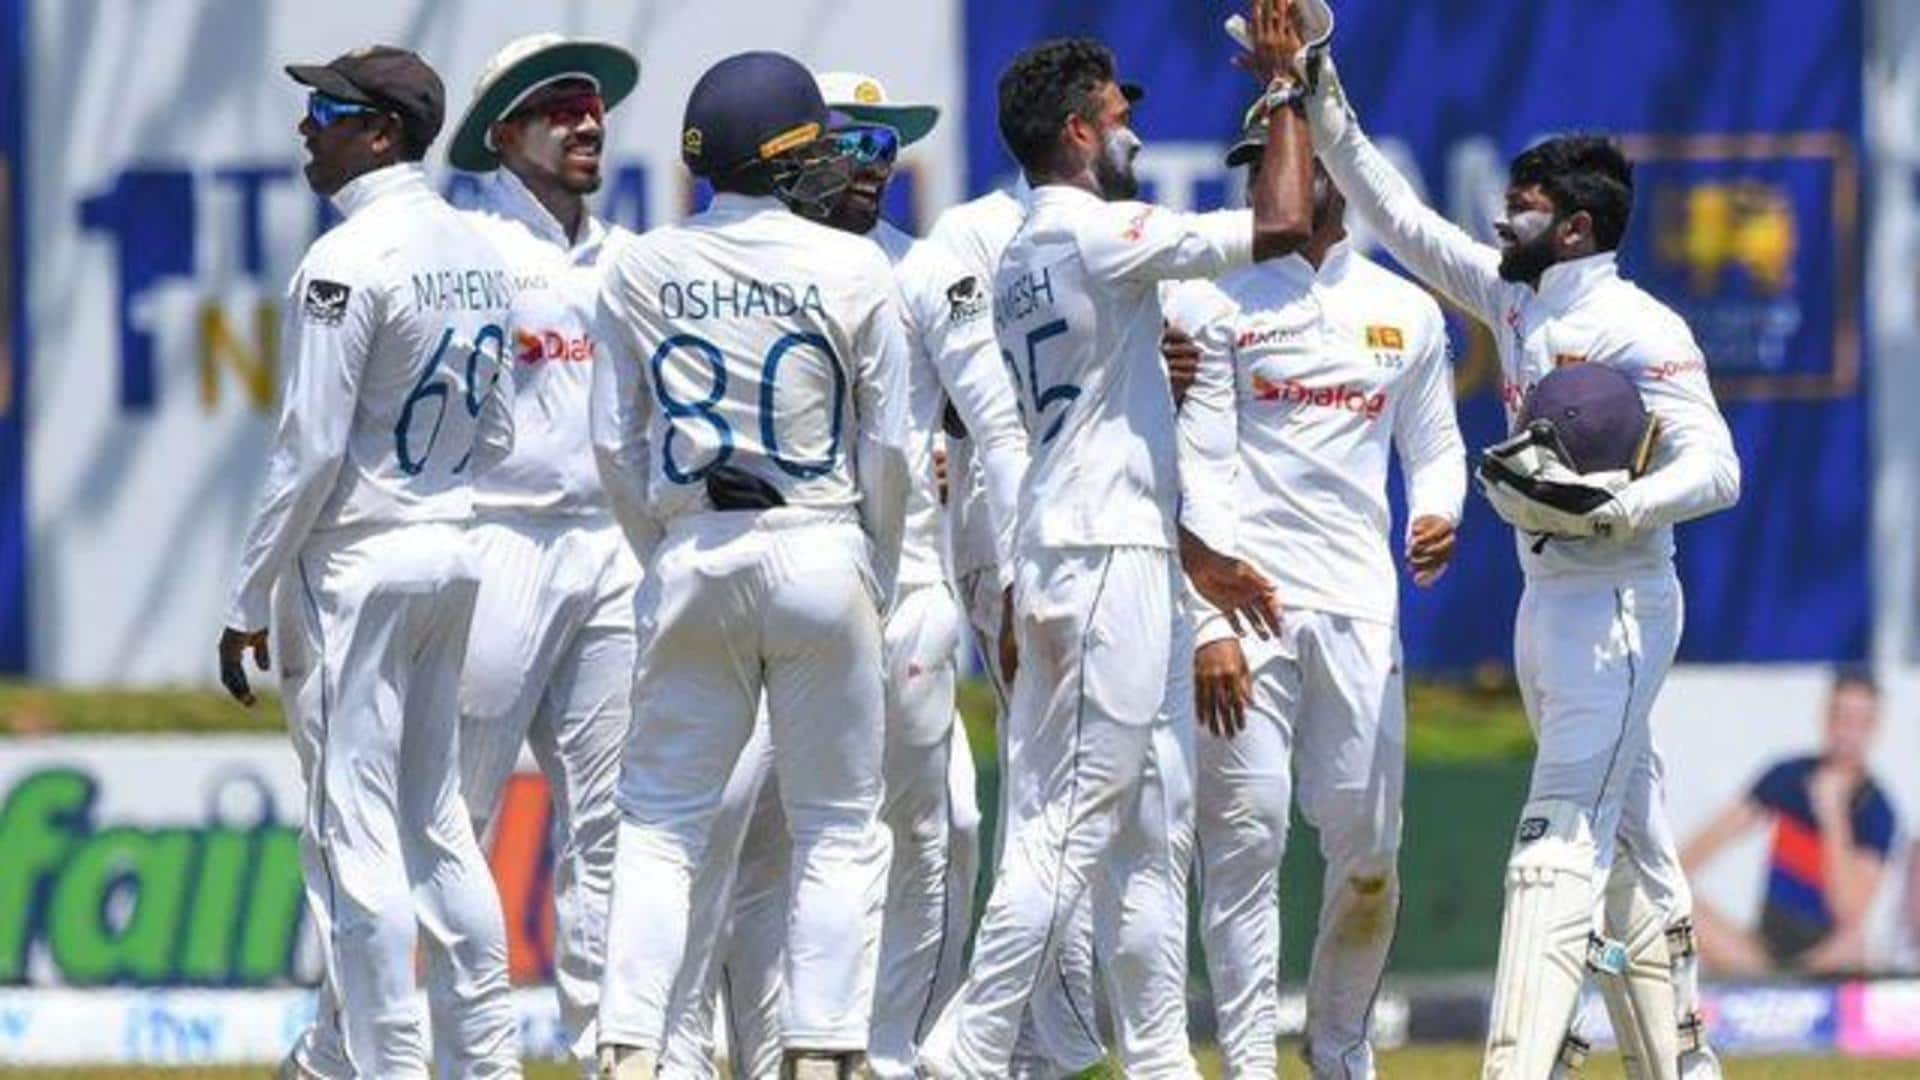 Sri Lanka vs Pakistan, Test series: Statistical preview